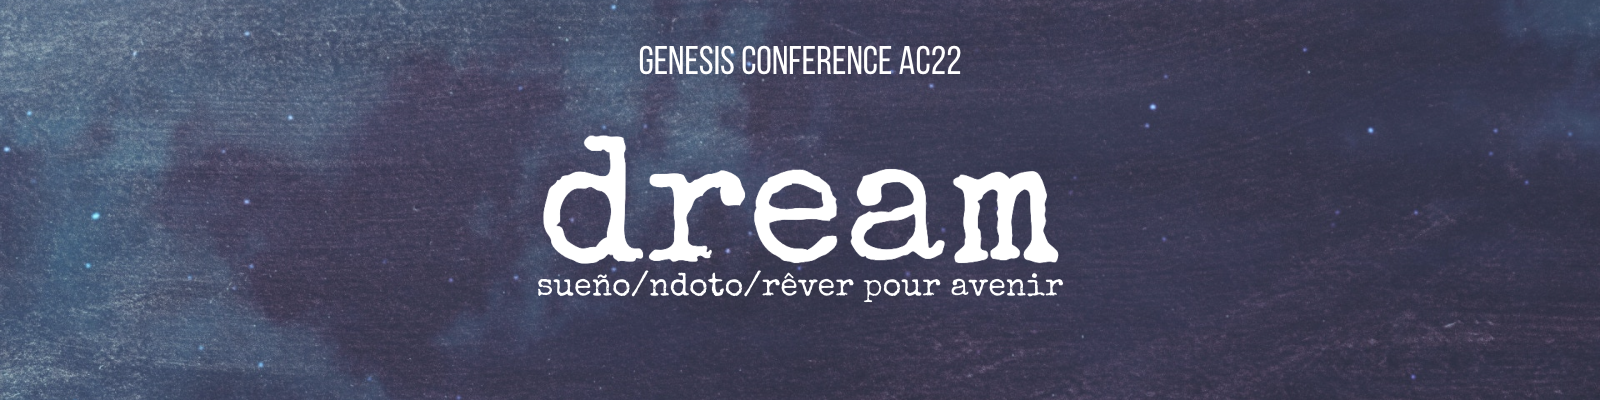 Annual Conference 2022: dream – Genesis FMC